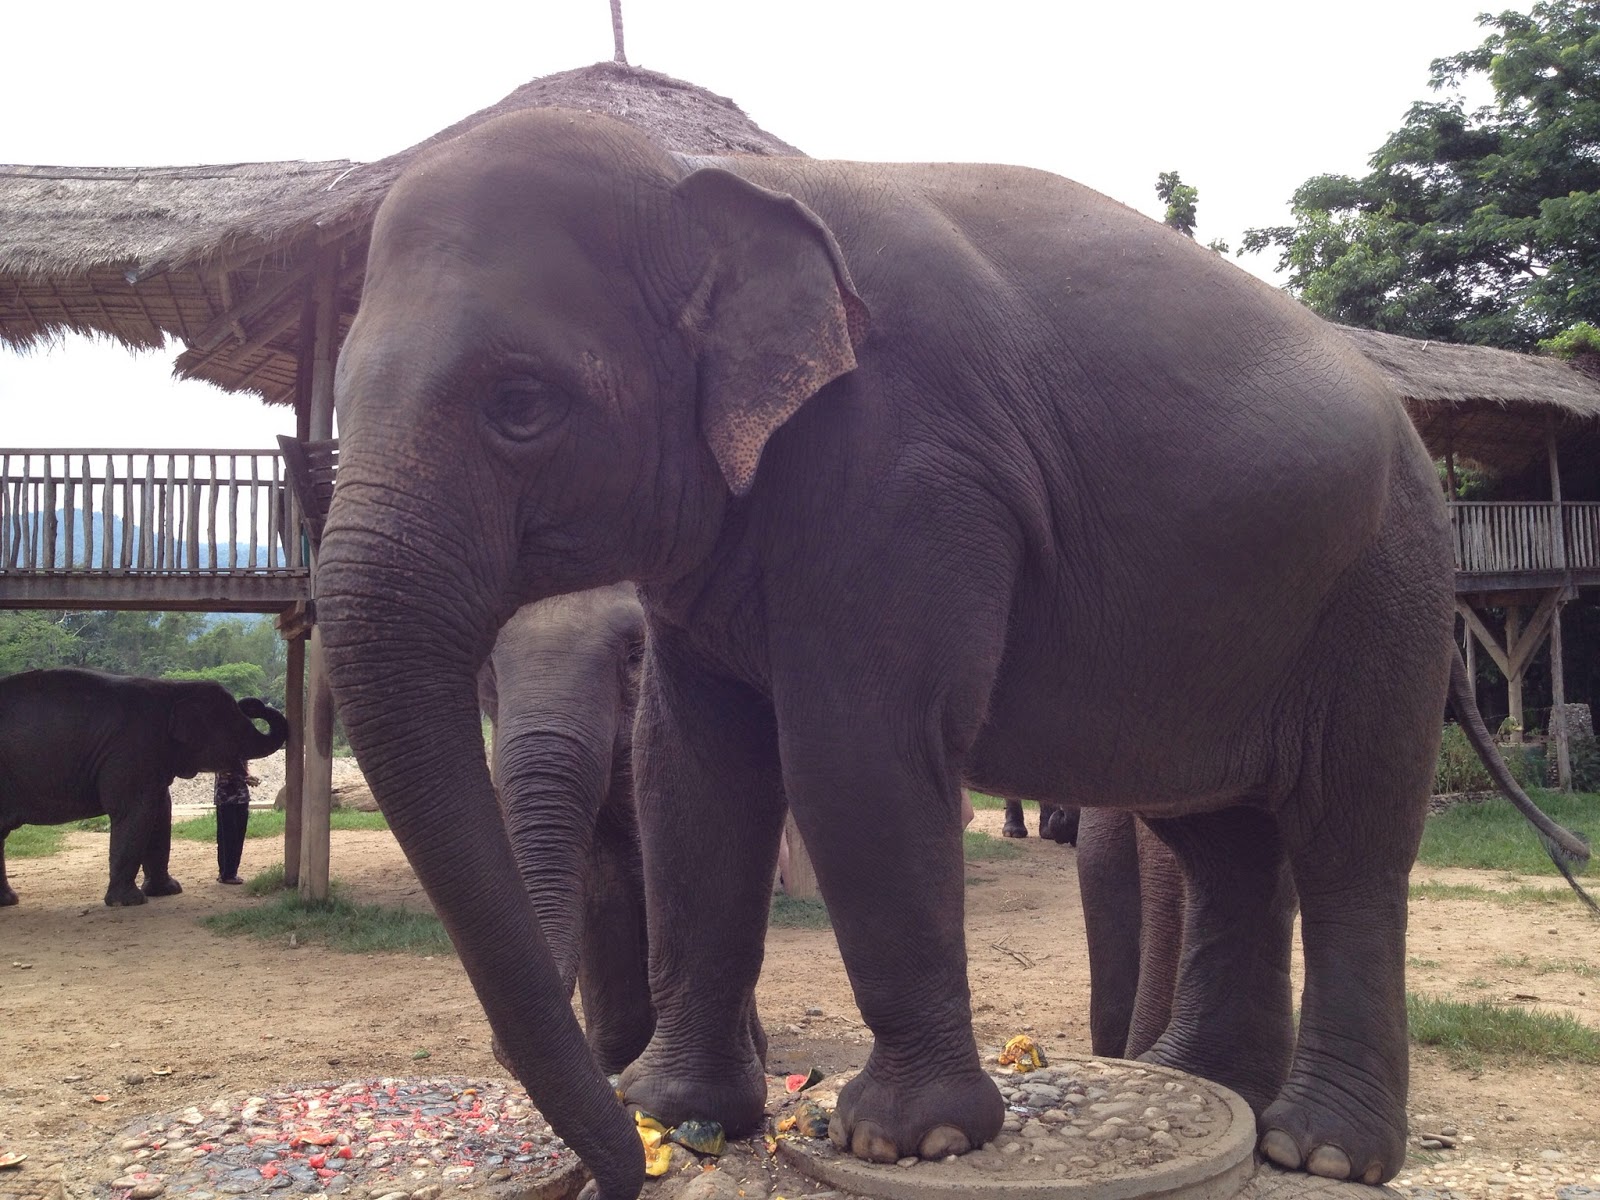 Chiang Mai - Elephants enjoying an after bath snack